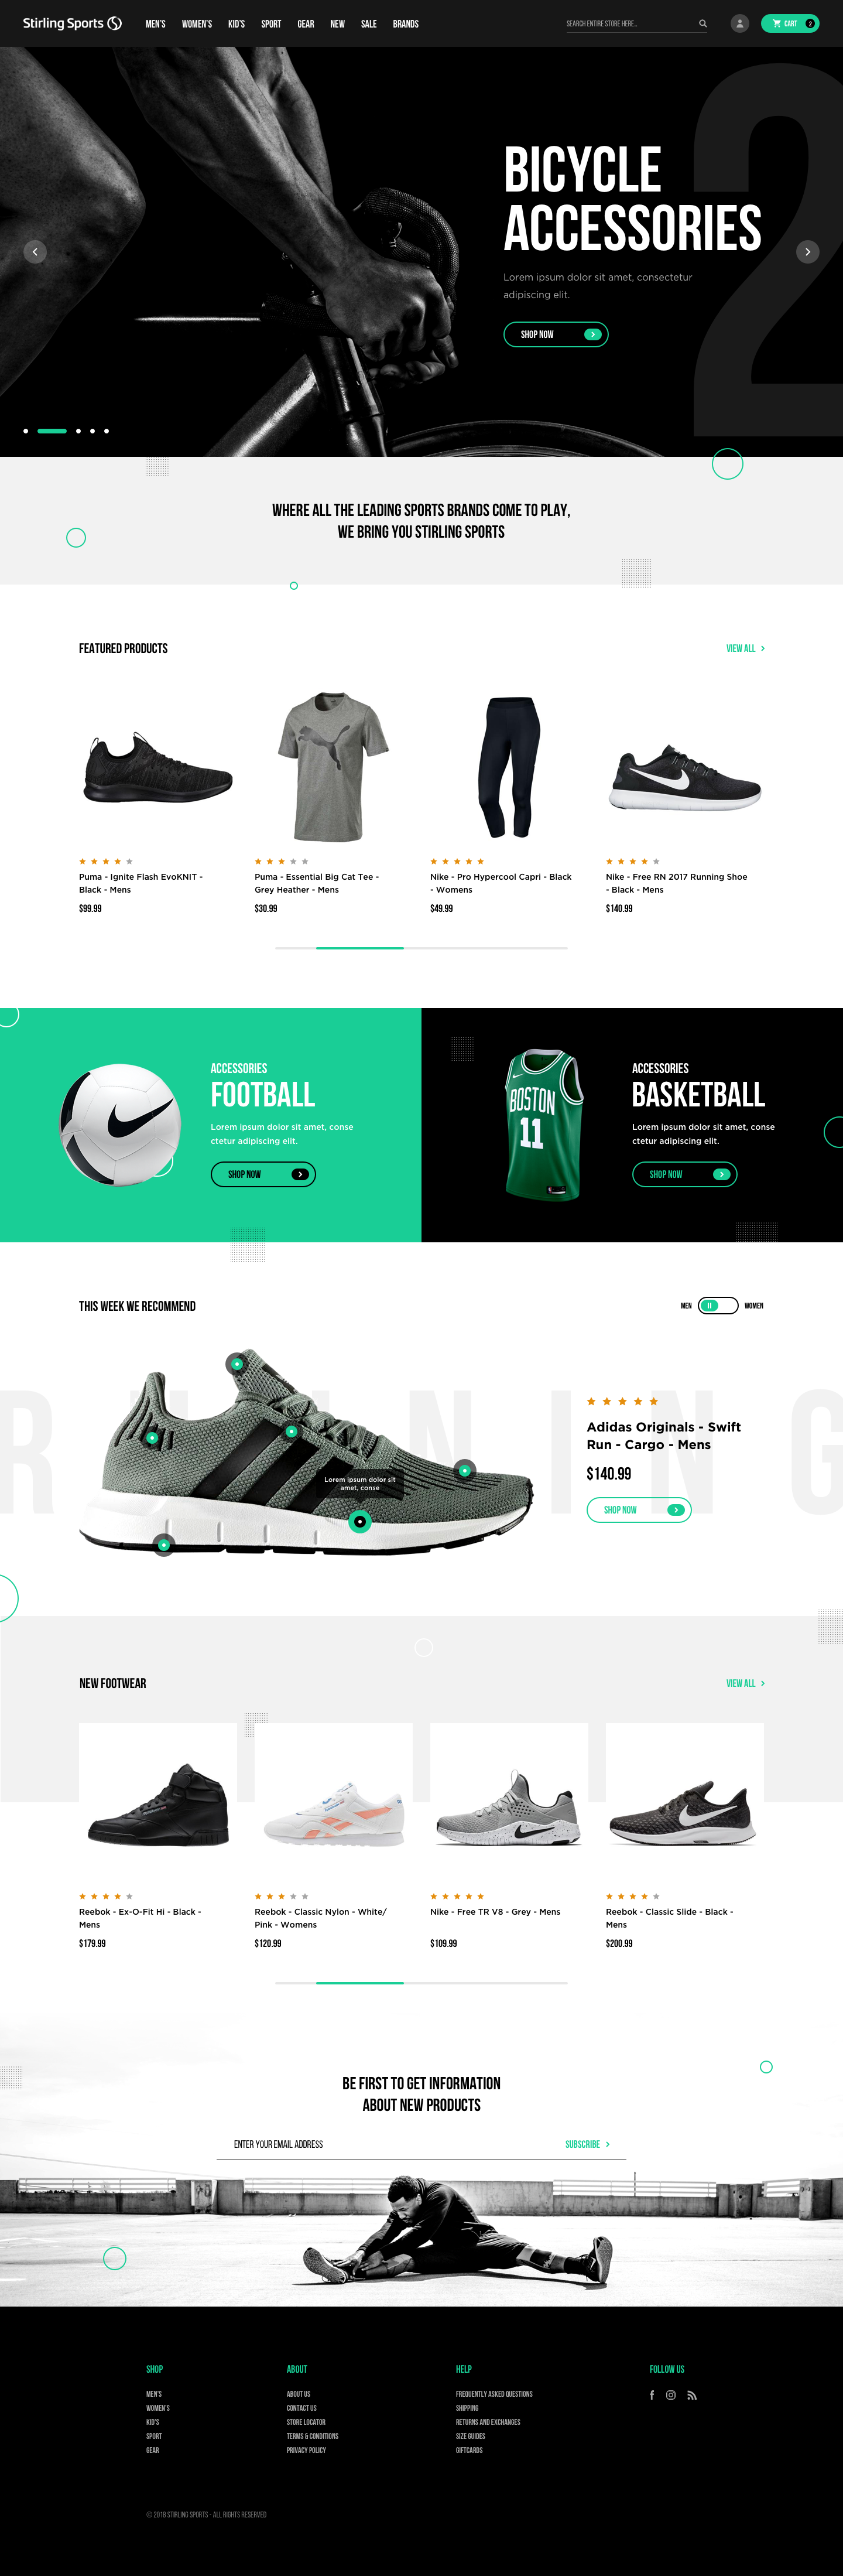 Sports Wear Website Redesign - Homepage by Marius Naujokas on Dribbble